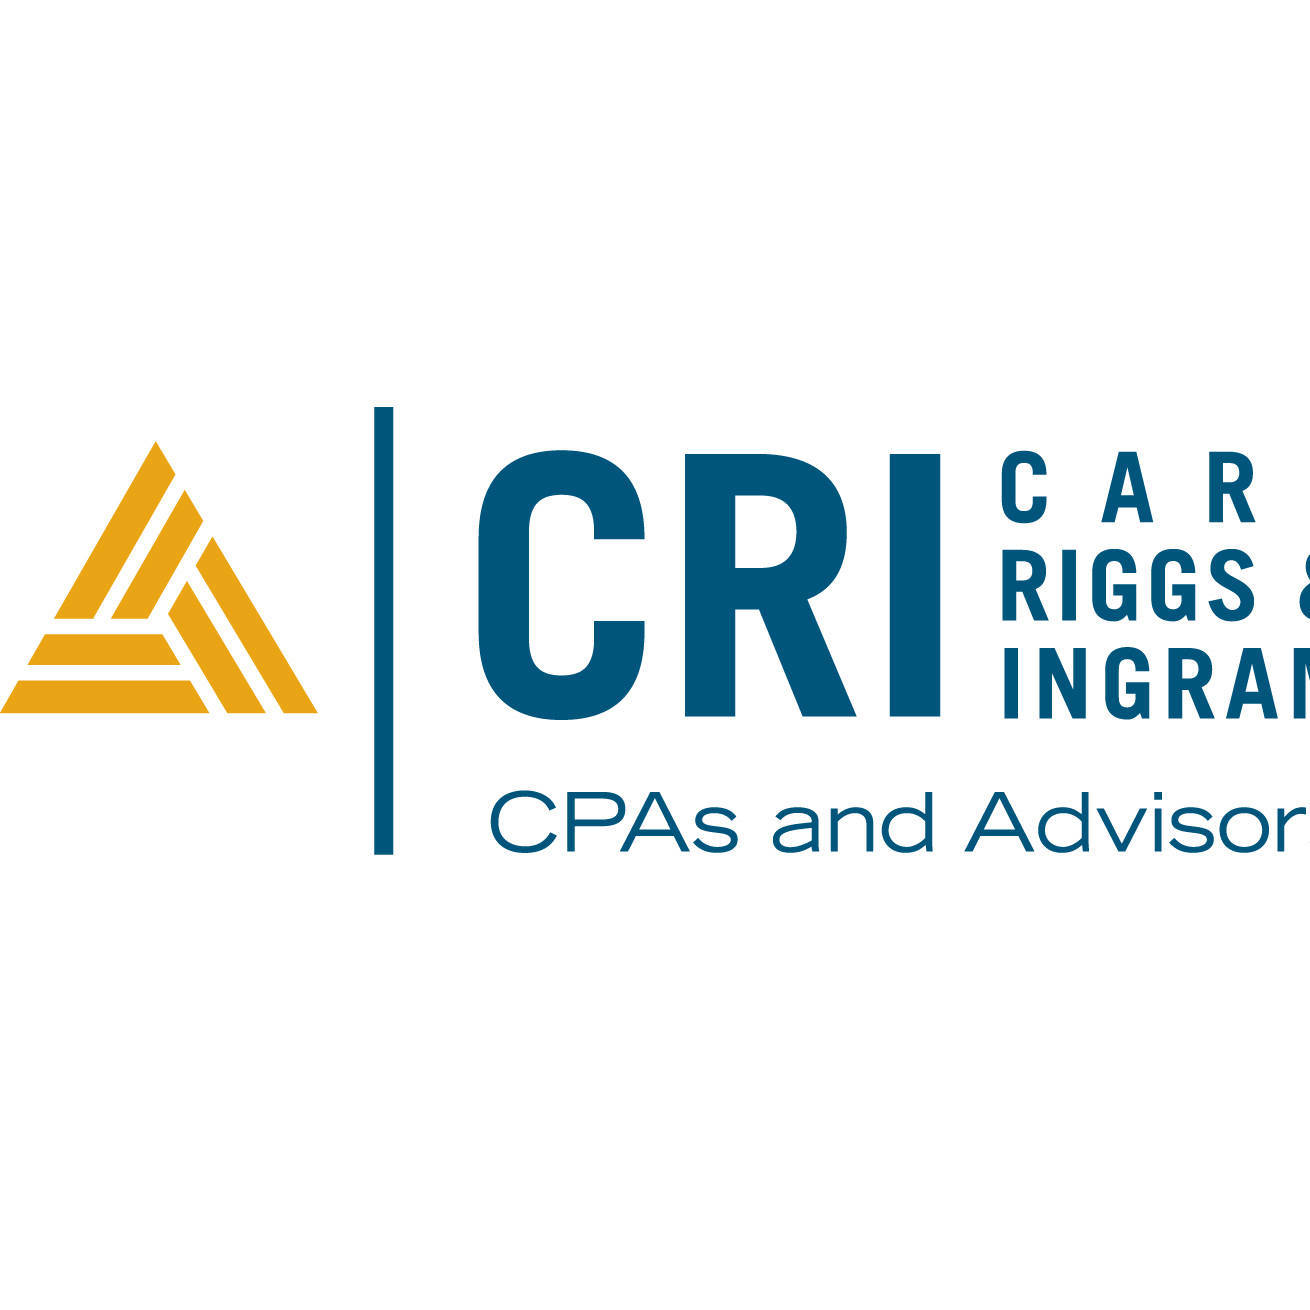 Carr Riggs and Ingram, LLC